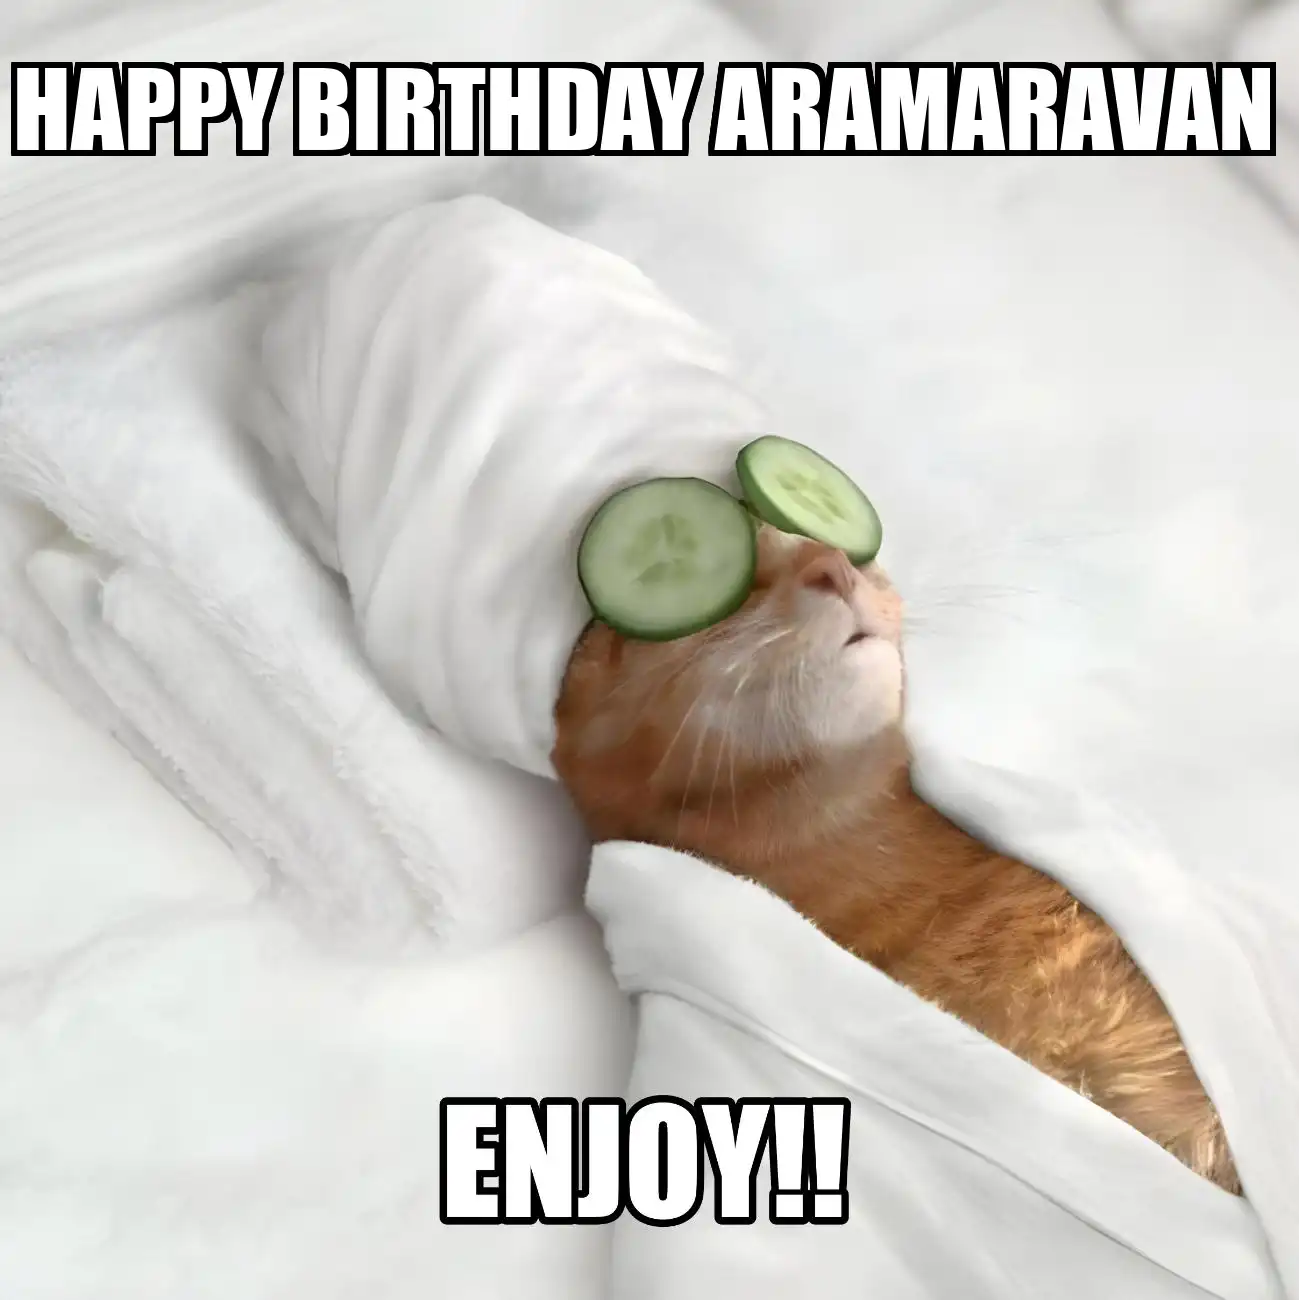 Happy Birthday Aramaravan Enjoy Cat Meme